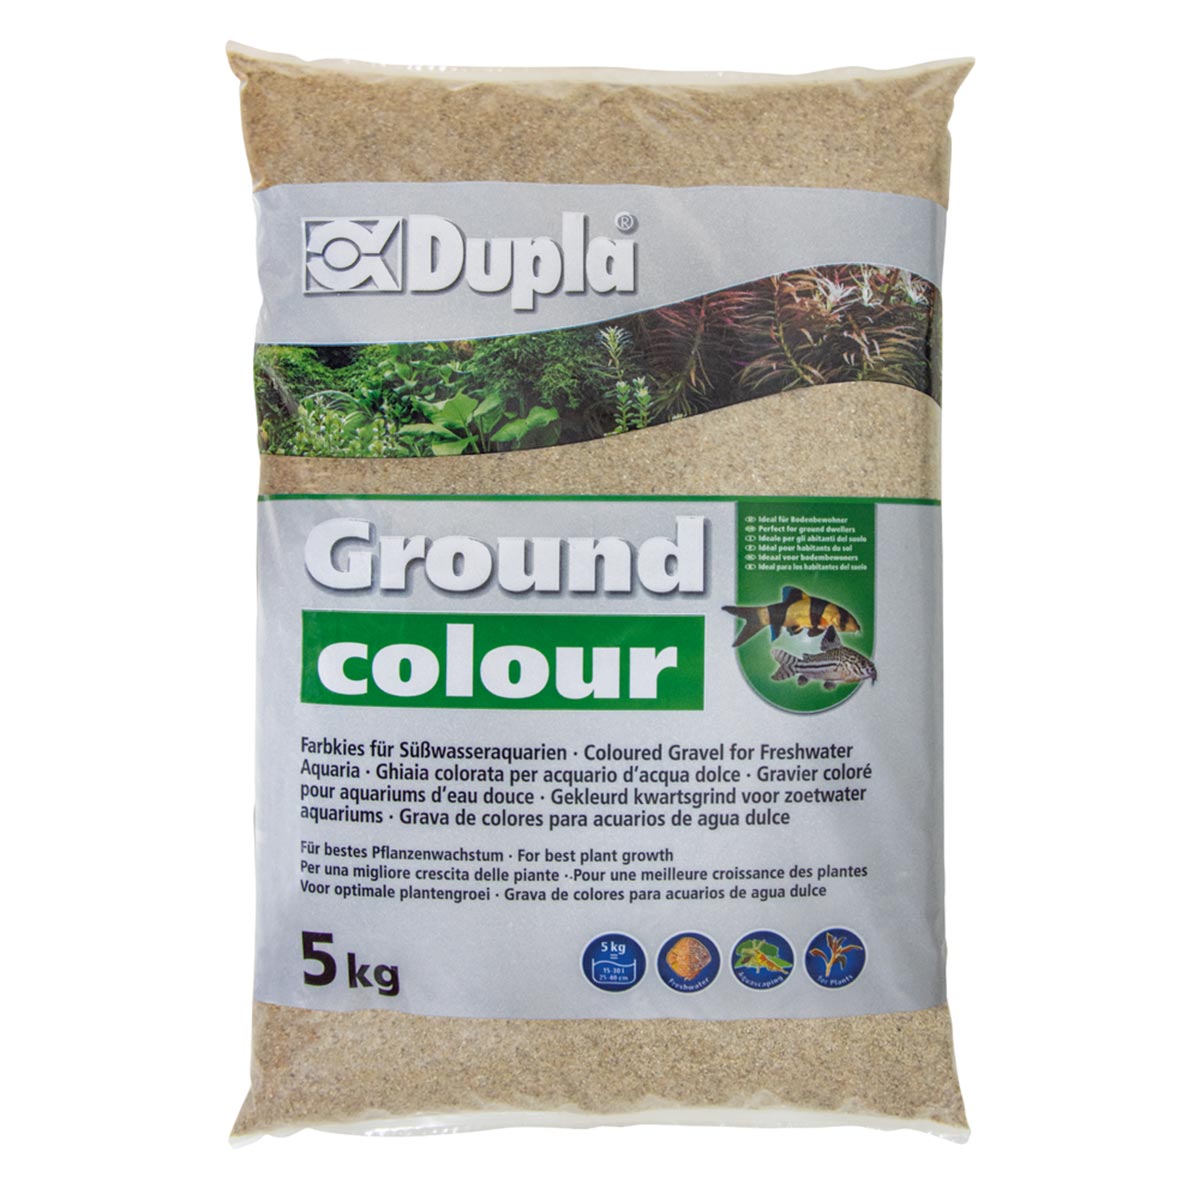 Dupla Ground colour River Sand 0,4-0,6mm 5kg